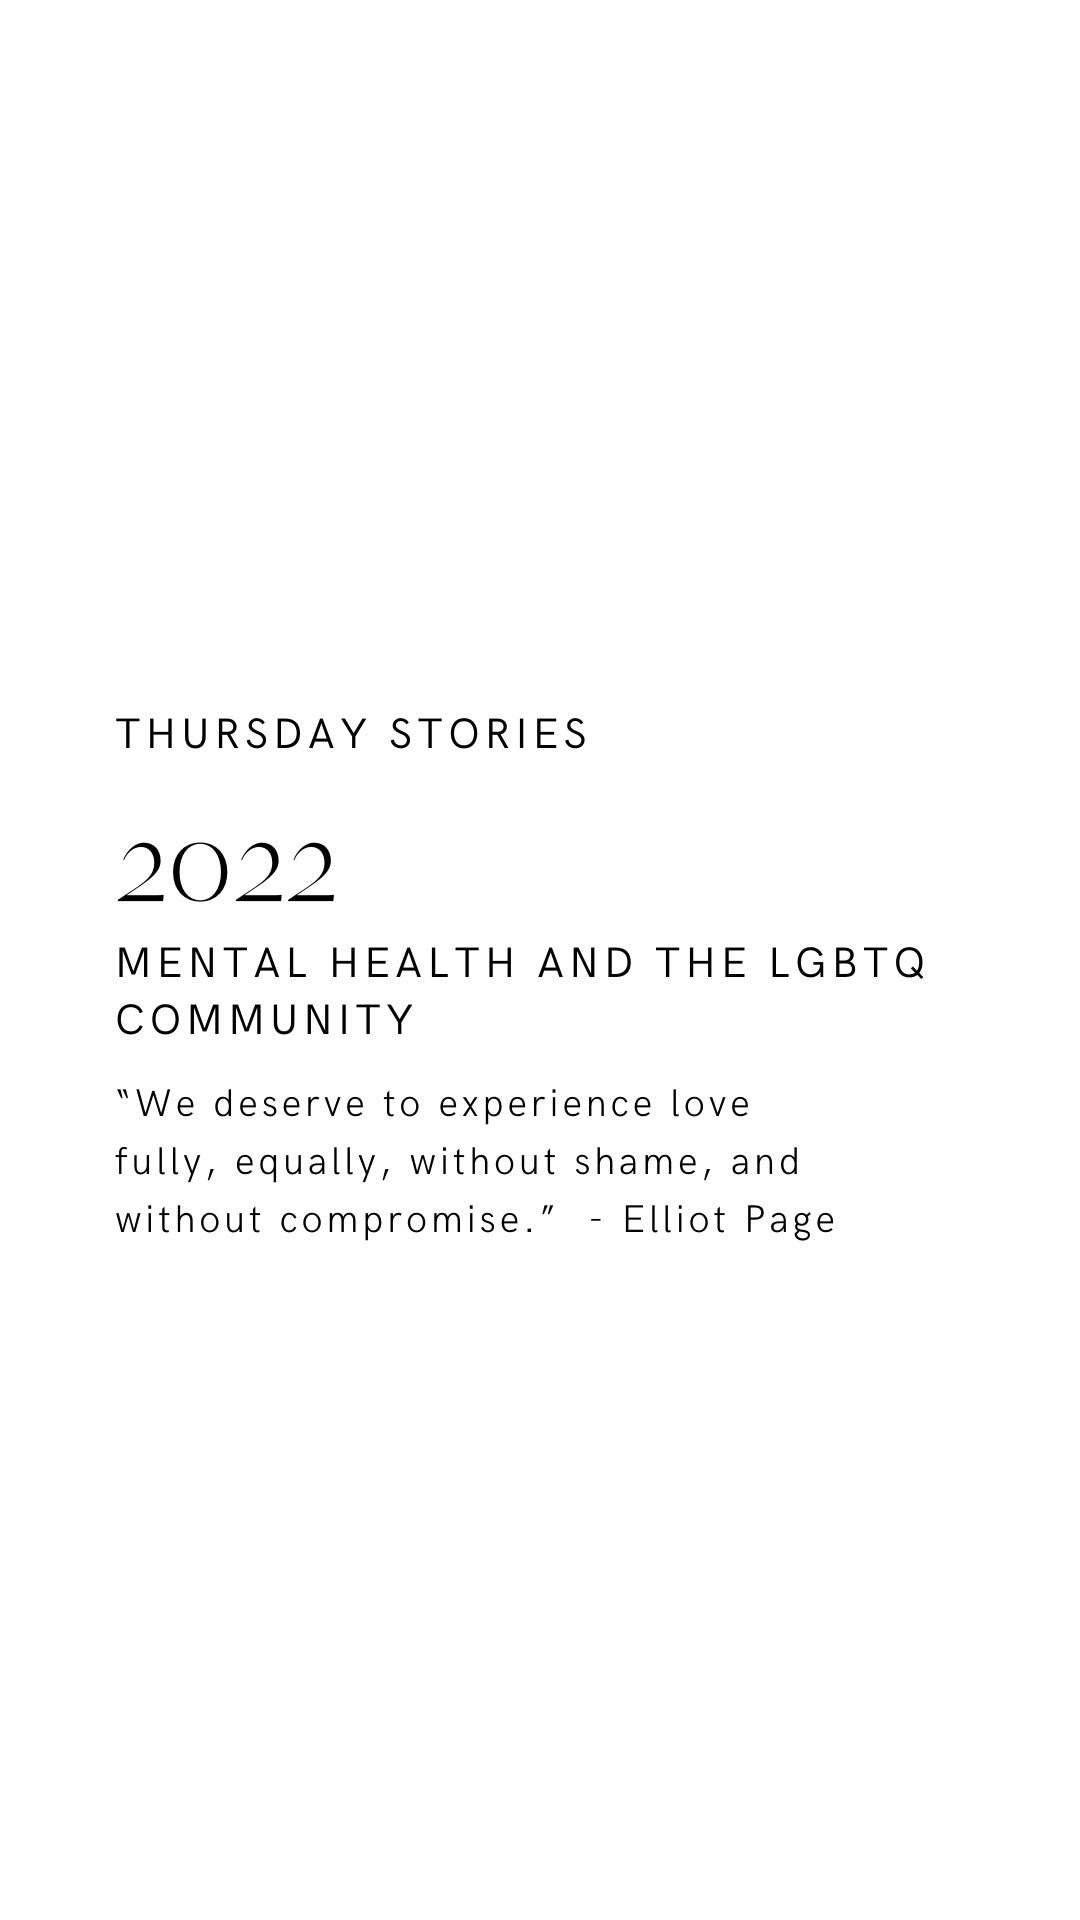 Mental Health and the LGBTQ Community